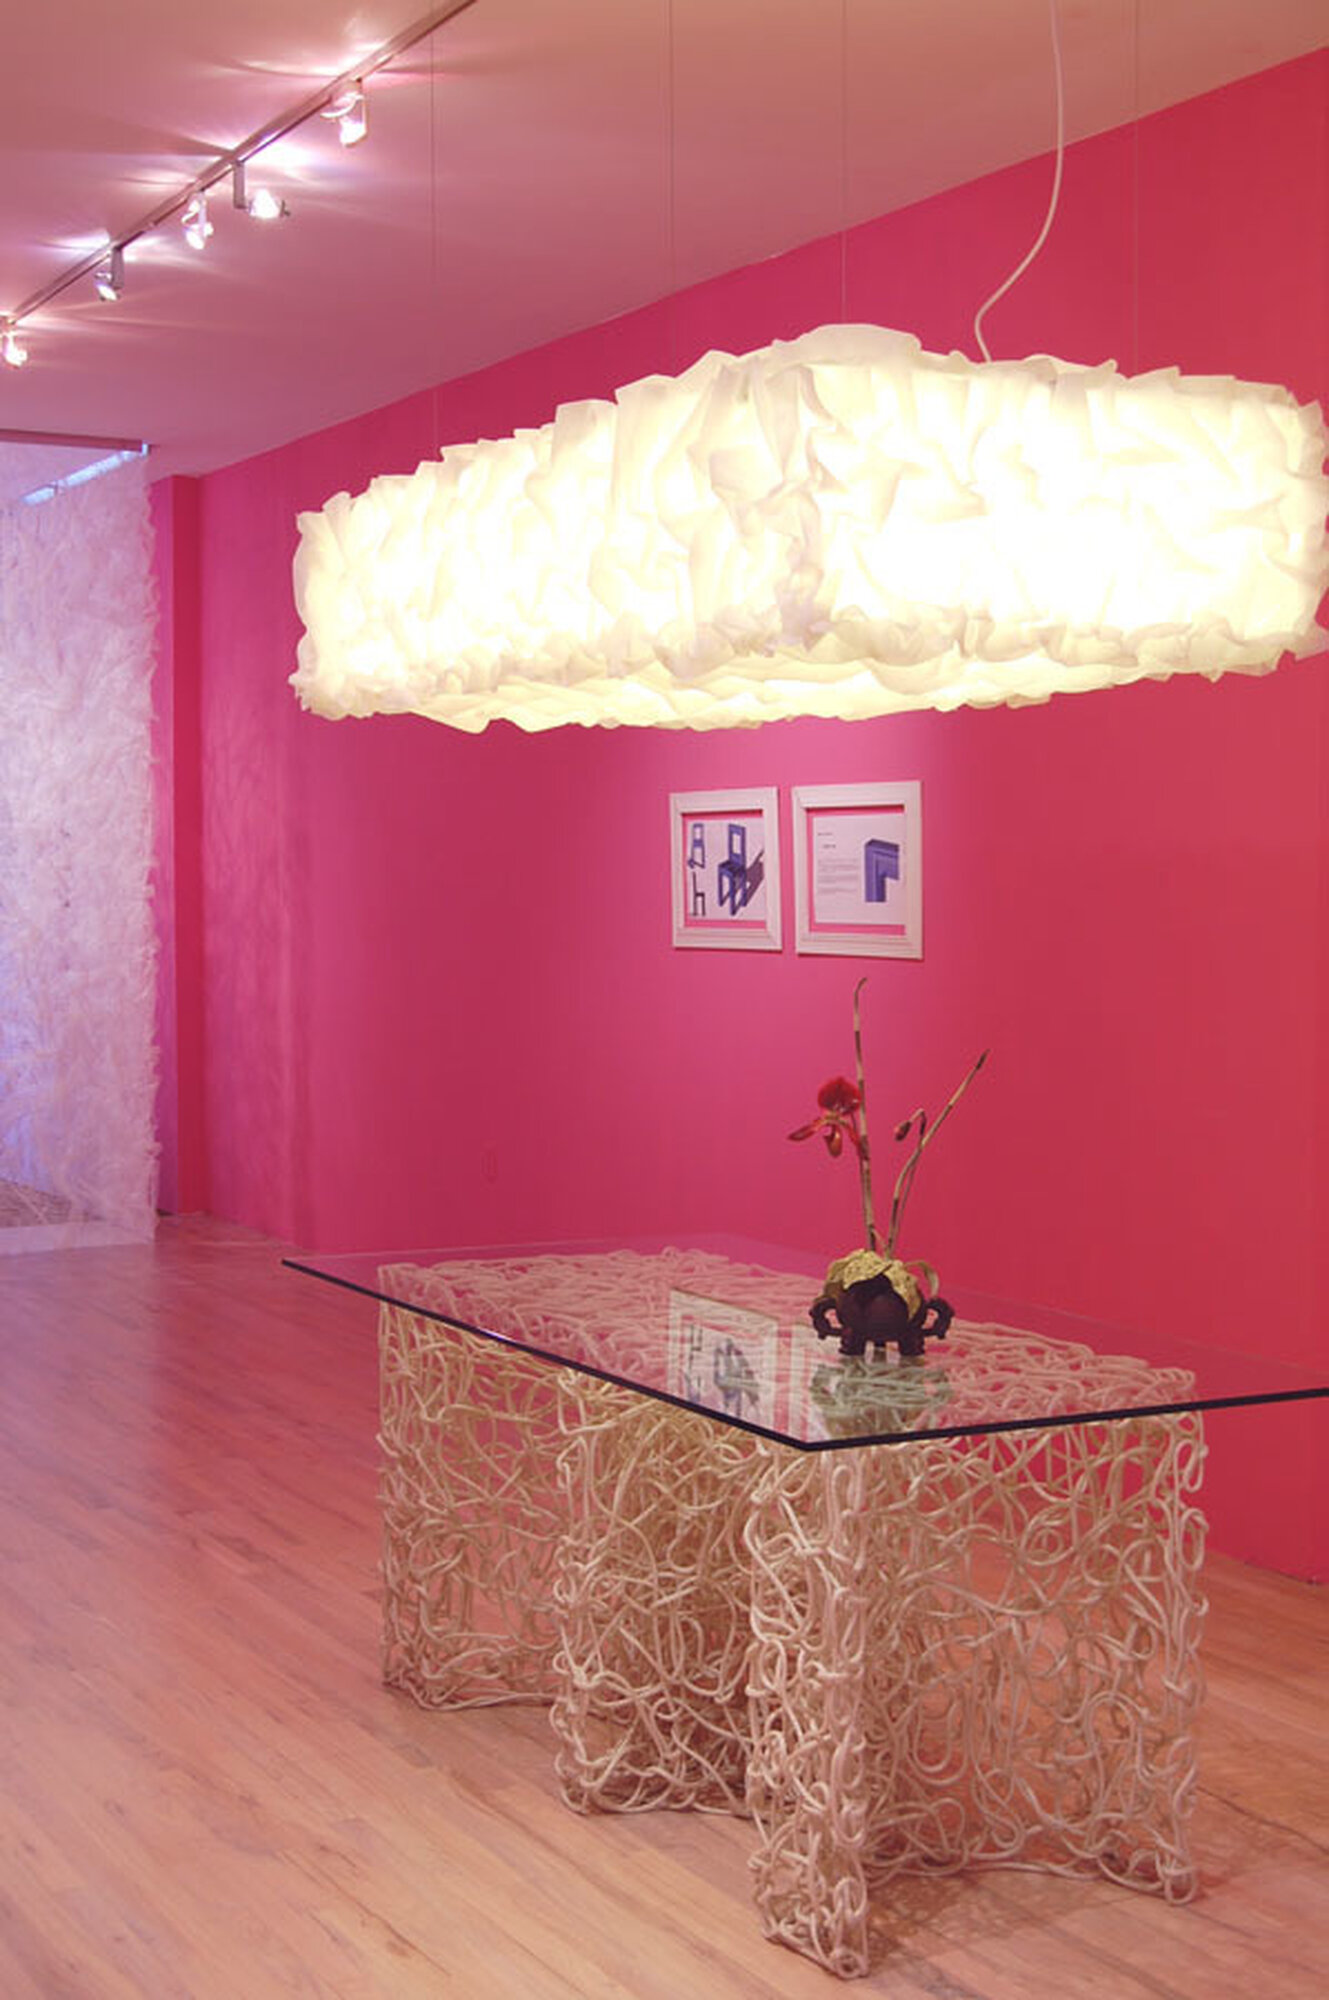 Knoop dining table, Puff chandelier, and Peep screen; Bridge Gallery installation, 2008